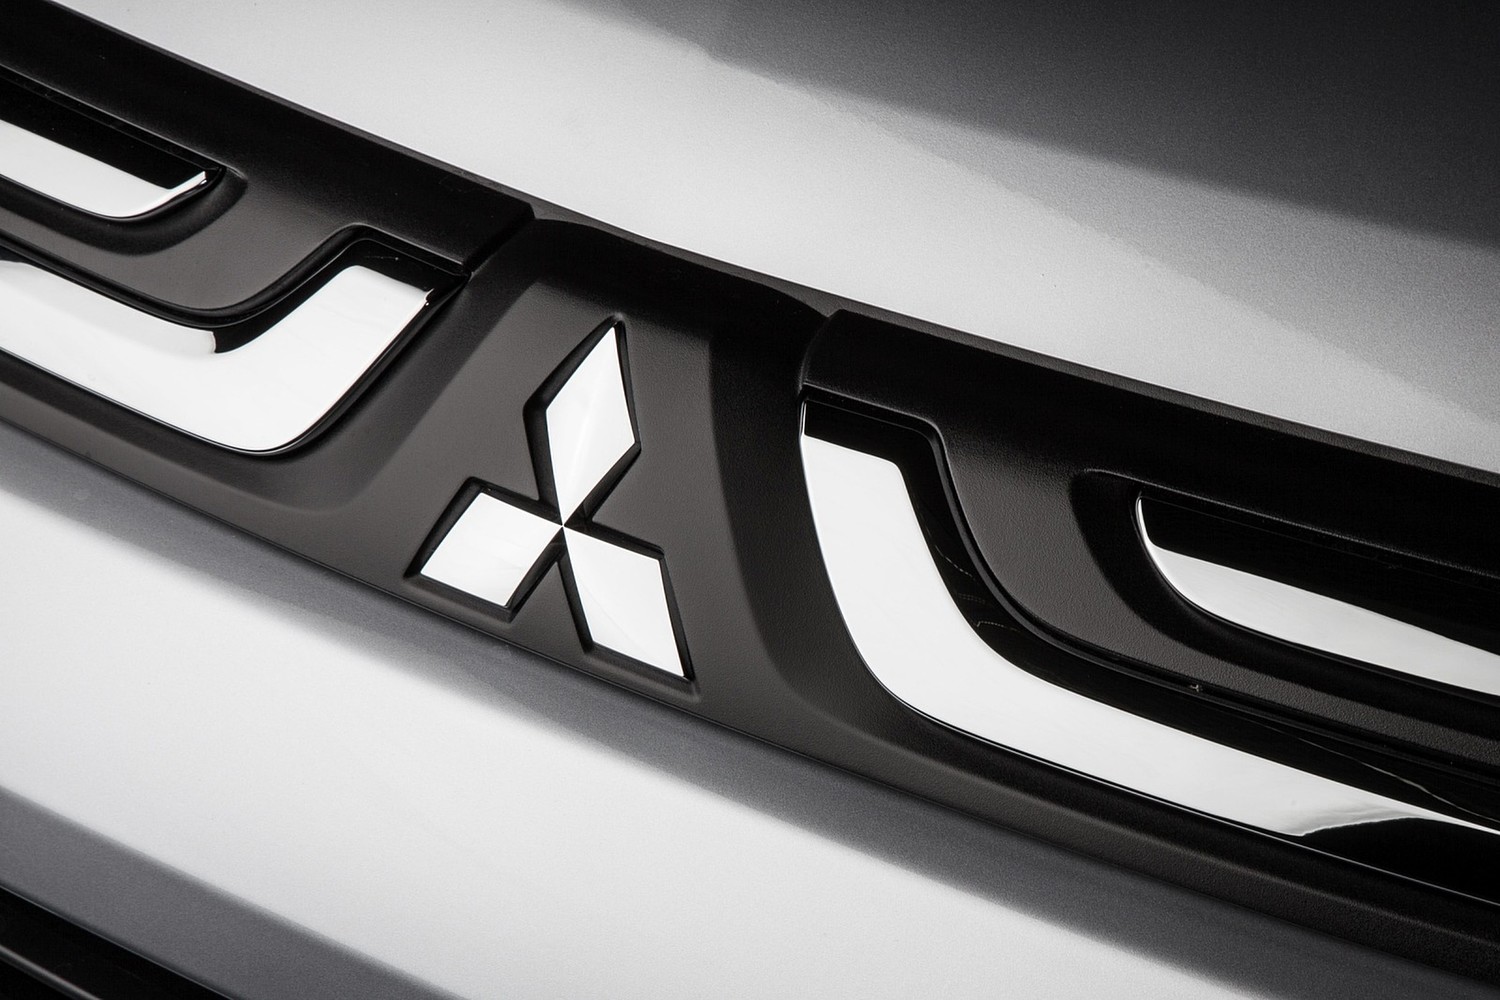 Mitsubishi Outlander GT 4dr SUV Front Badge (2014 model year shown)